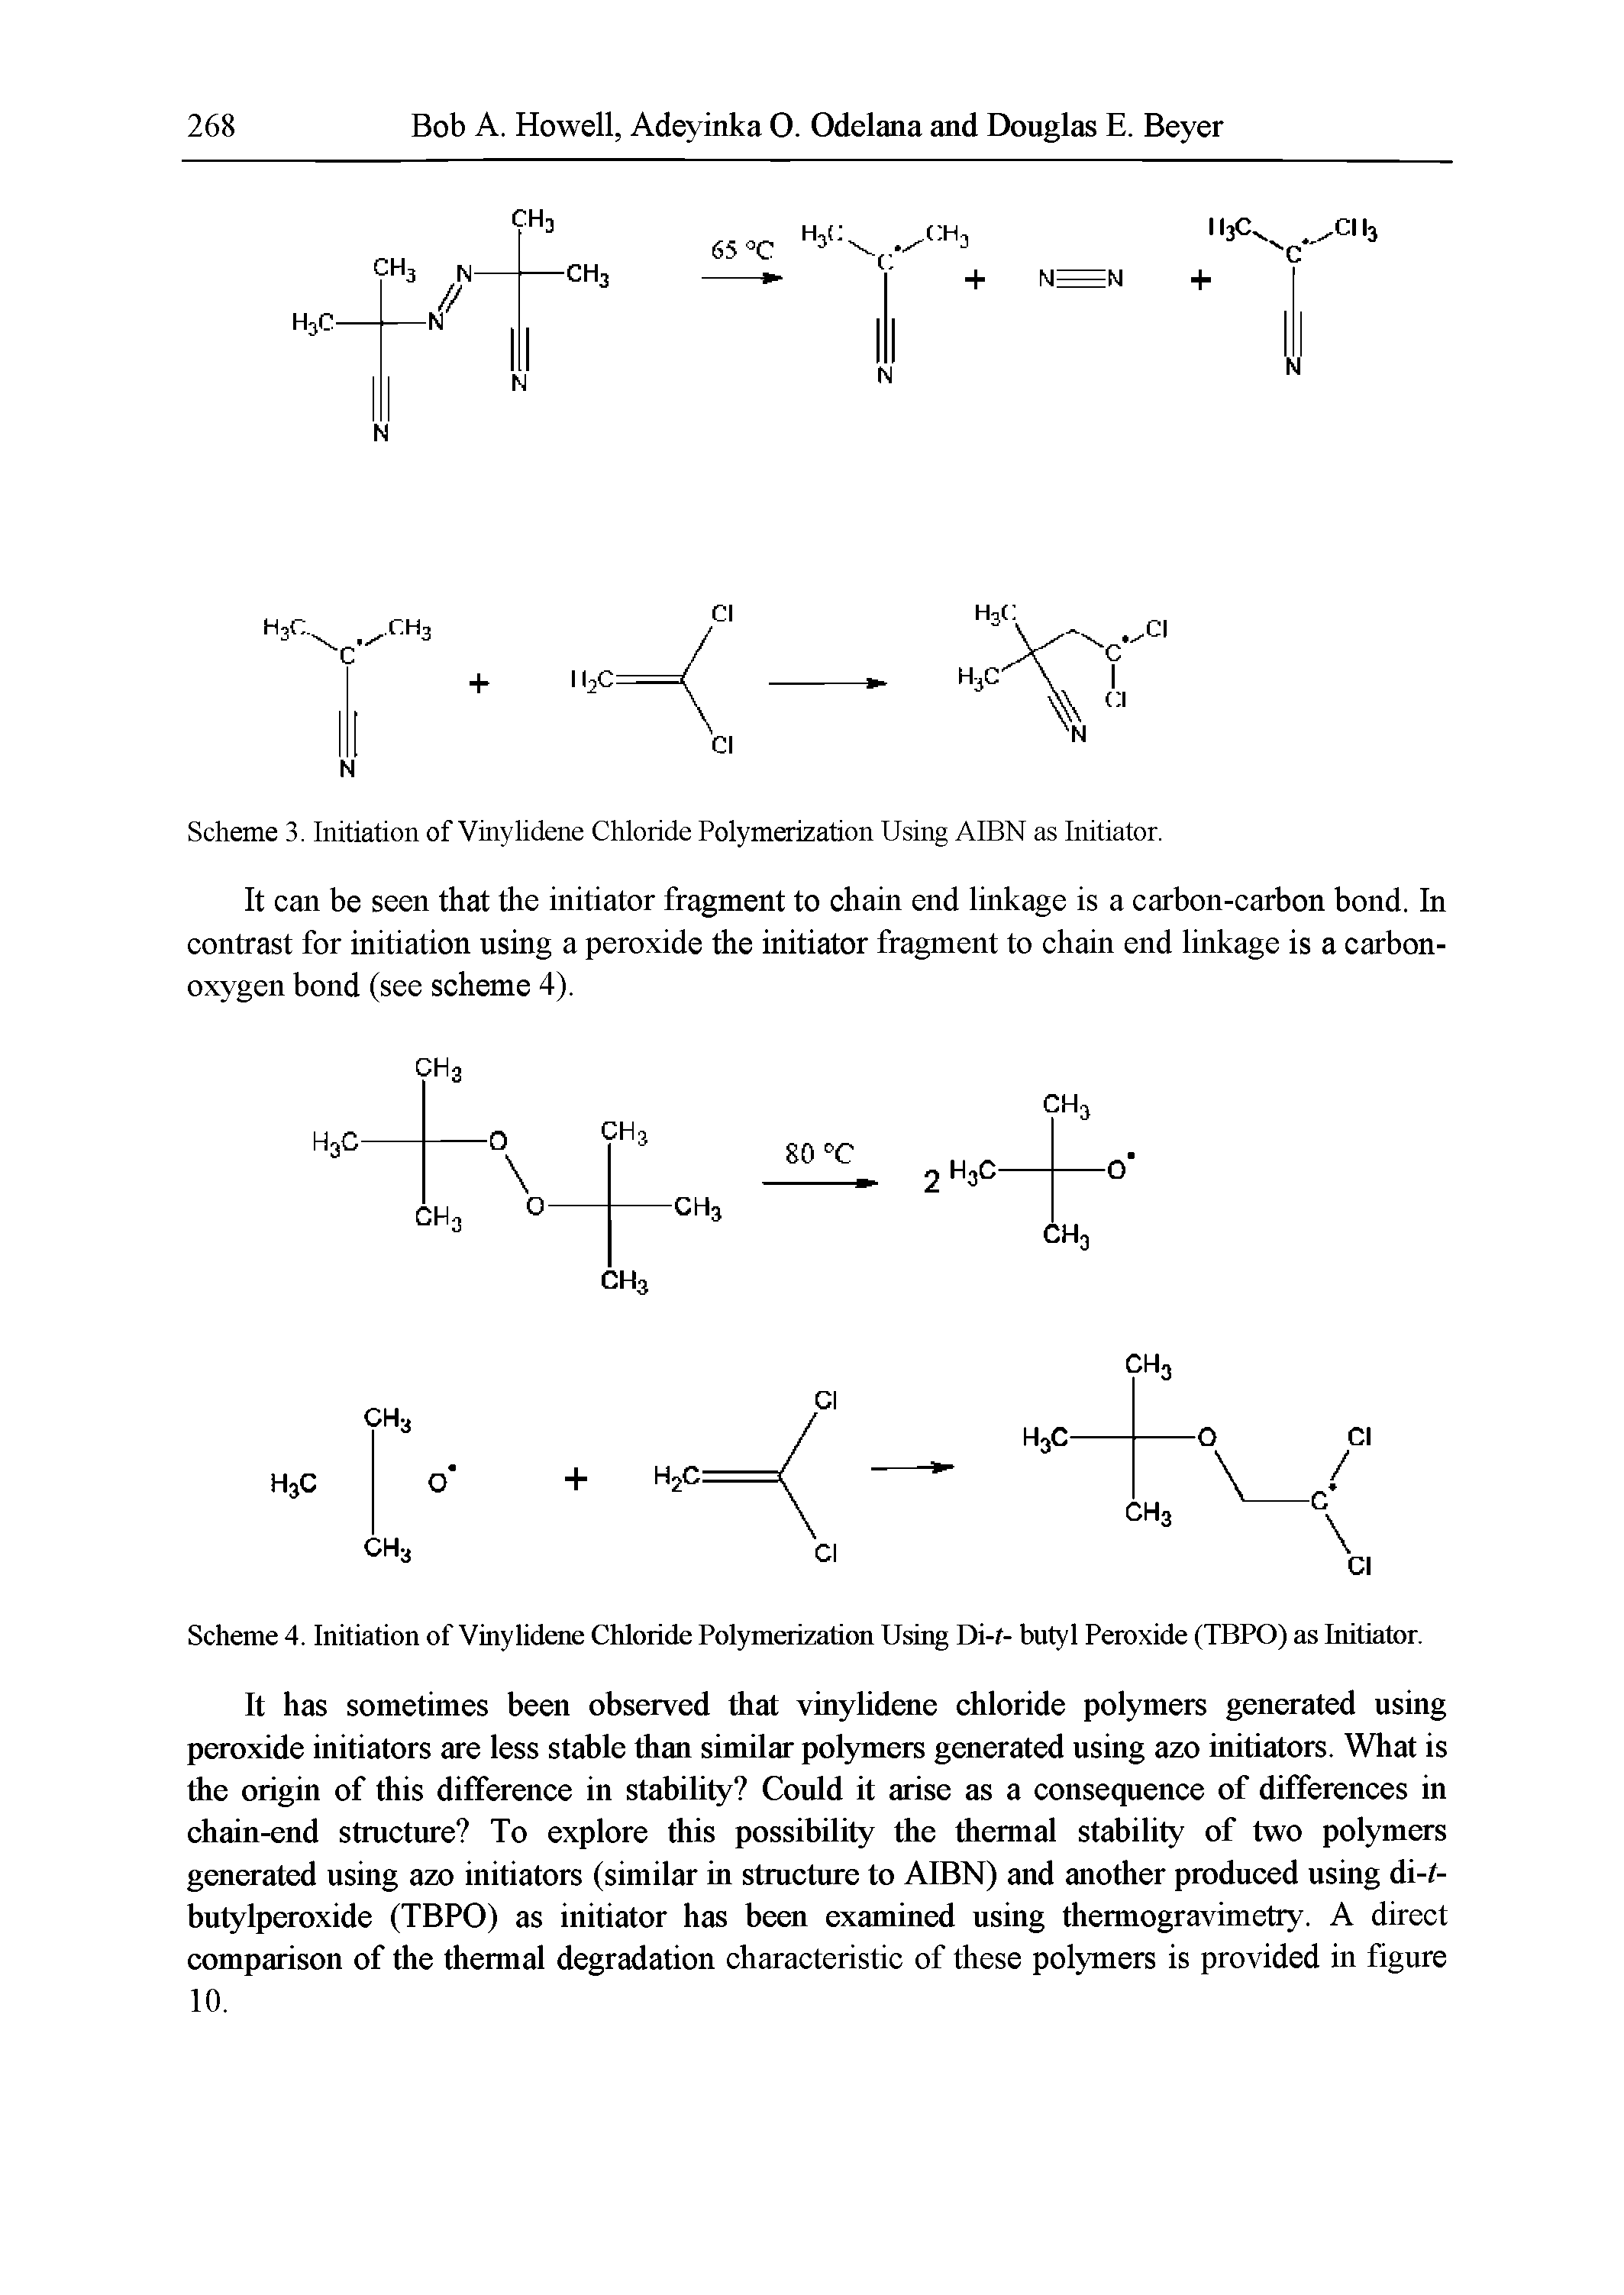 Scheme 3. Initiation of Vinylidene Chloride Polymerization Using AIBN as Initiator.